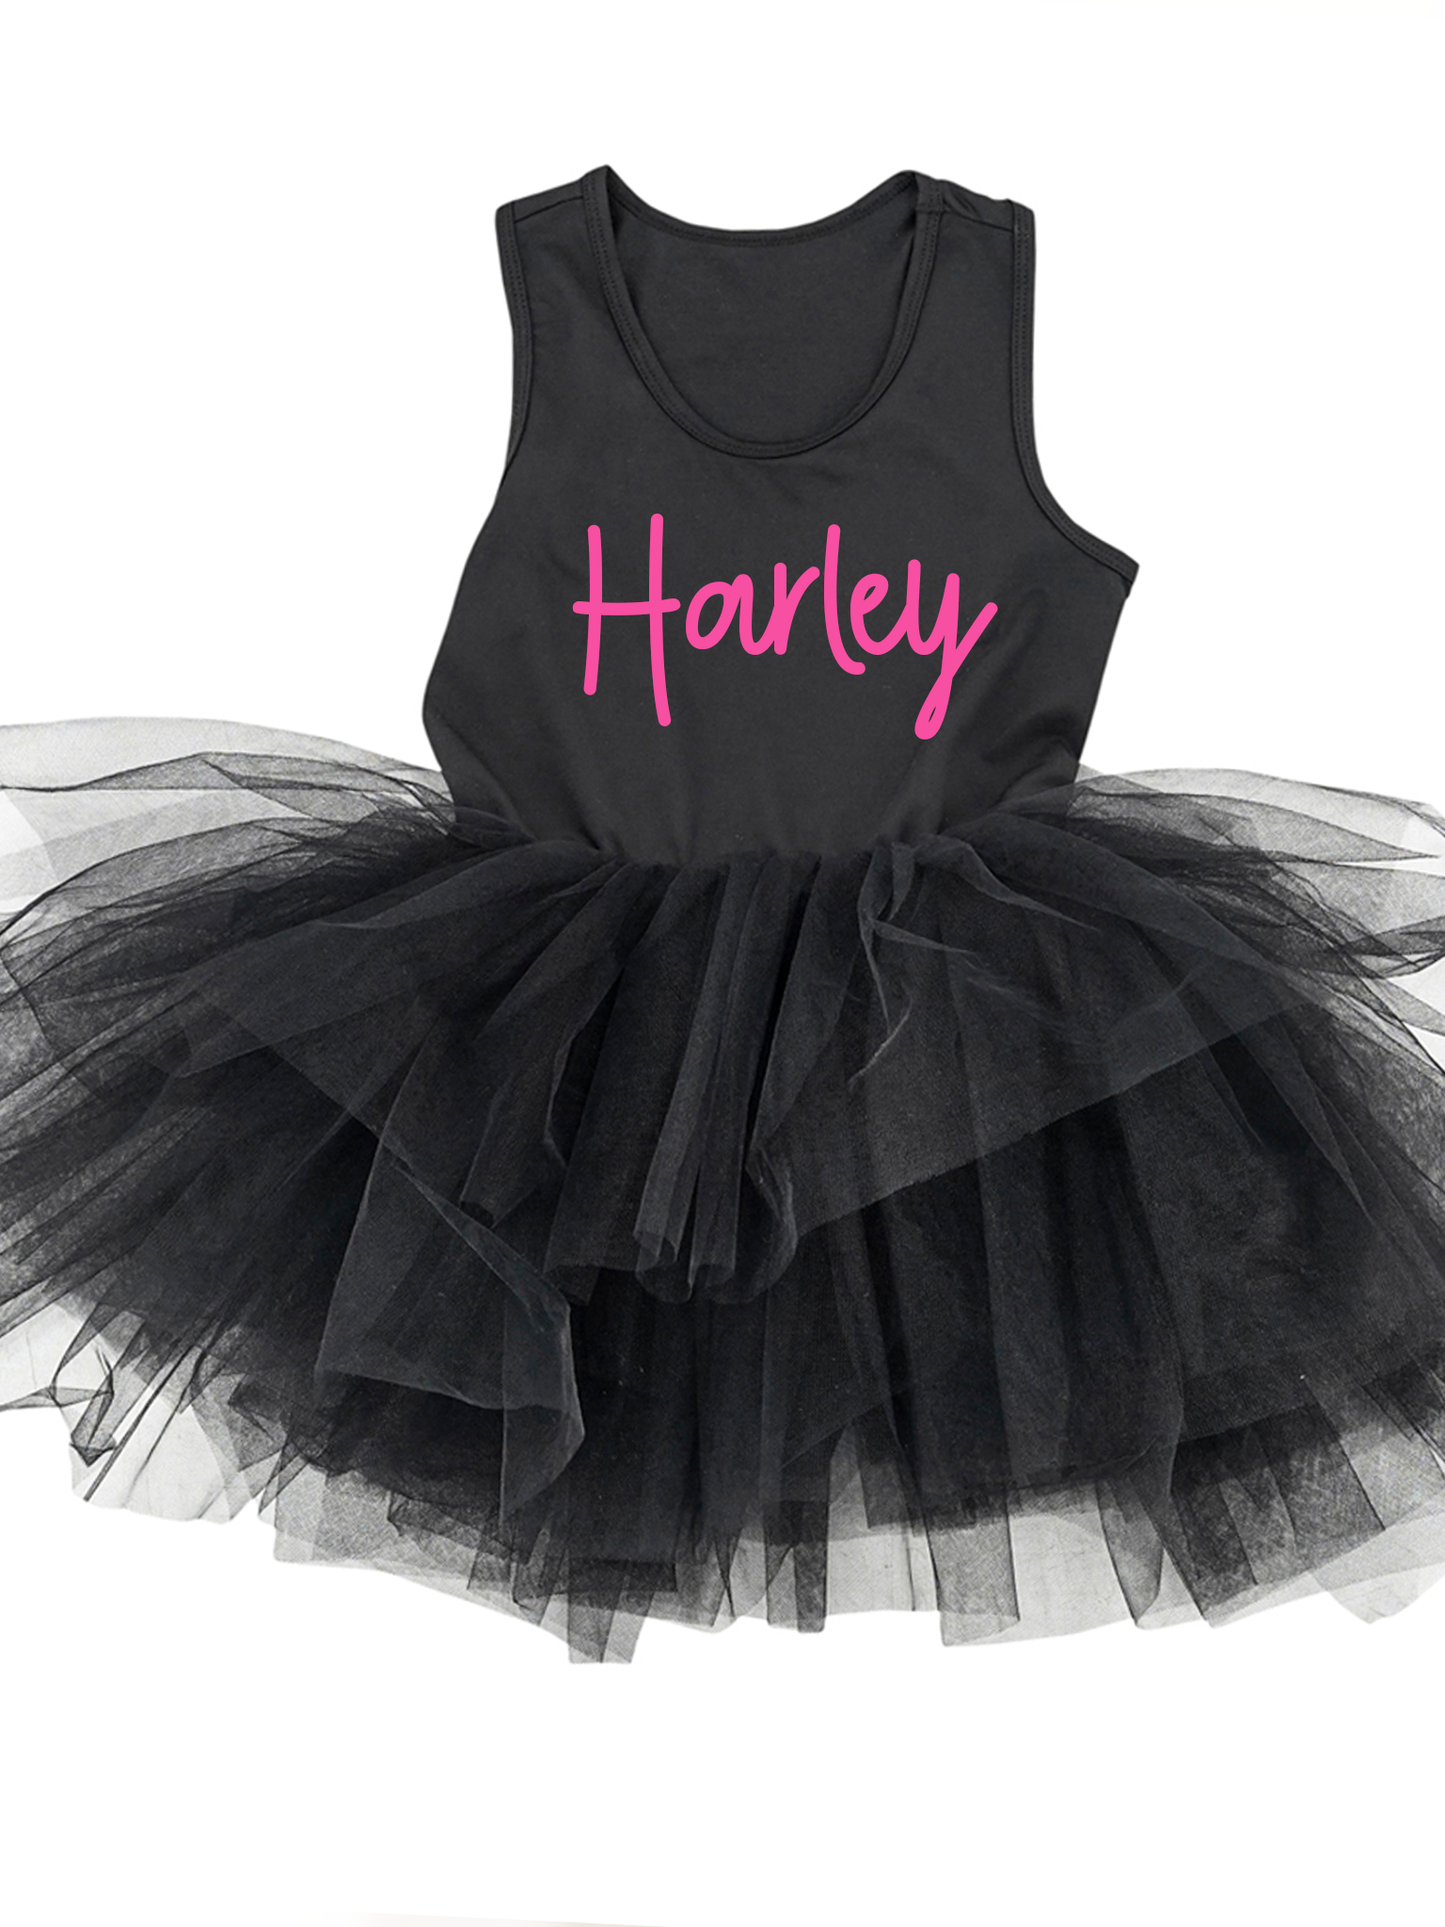 Harley Personalized Heart Tutu Dress